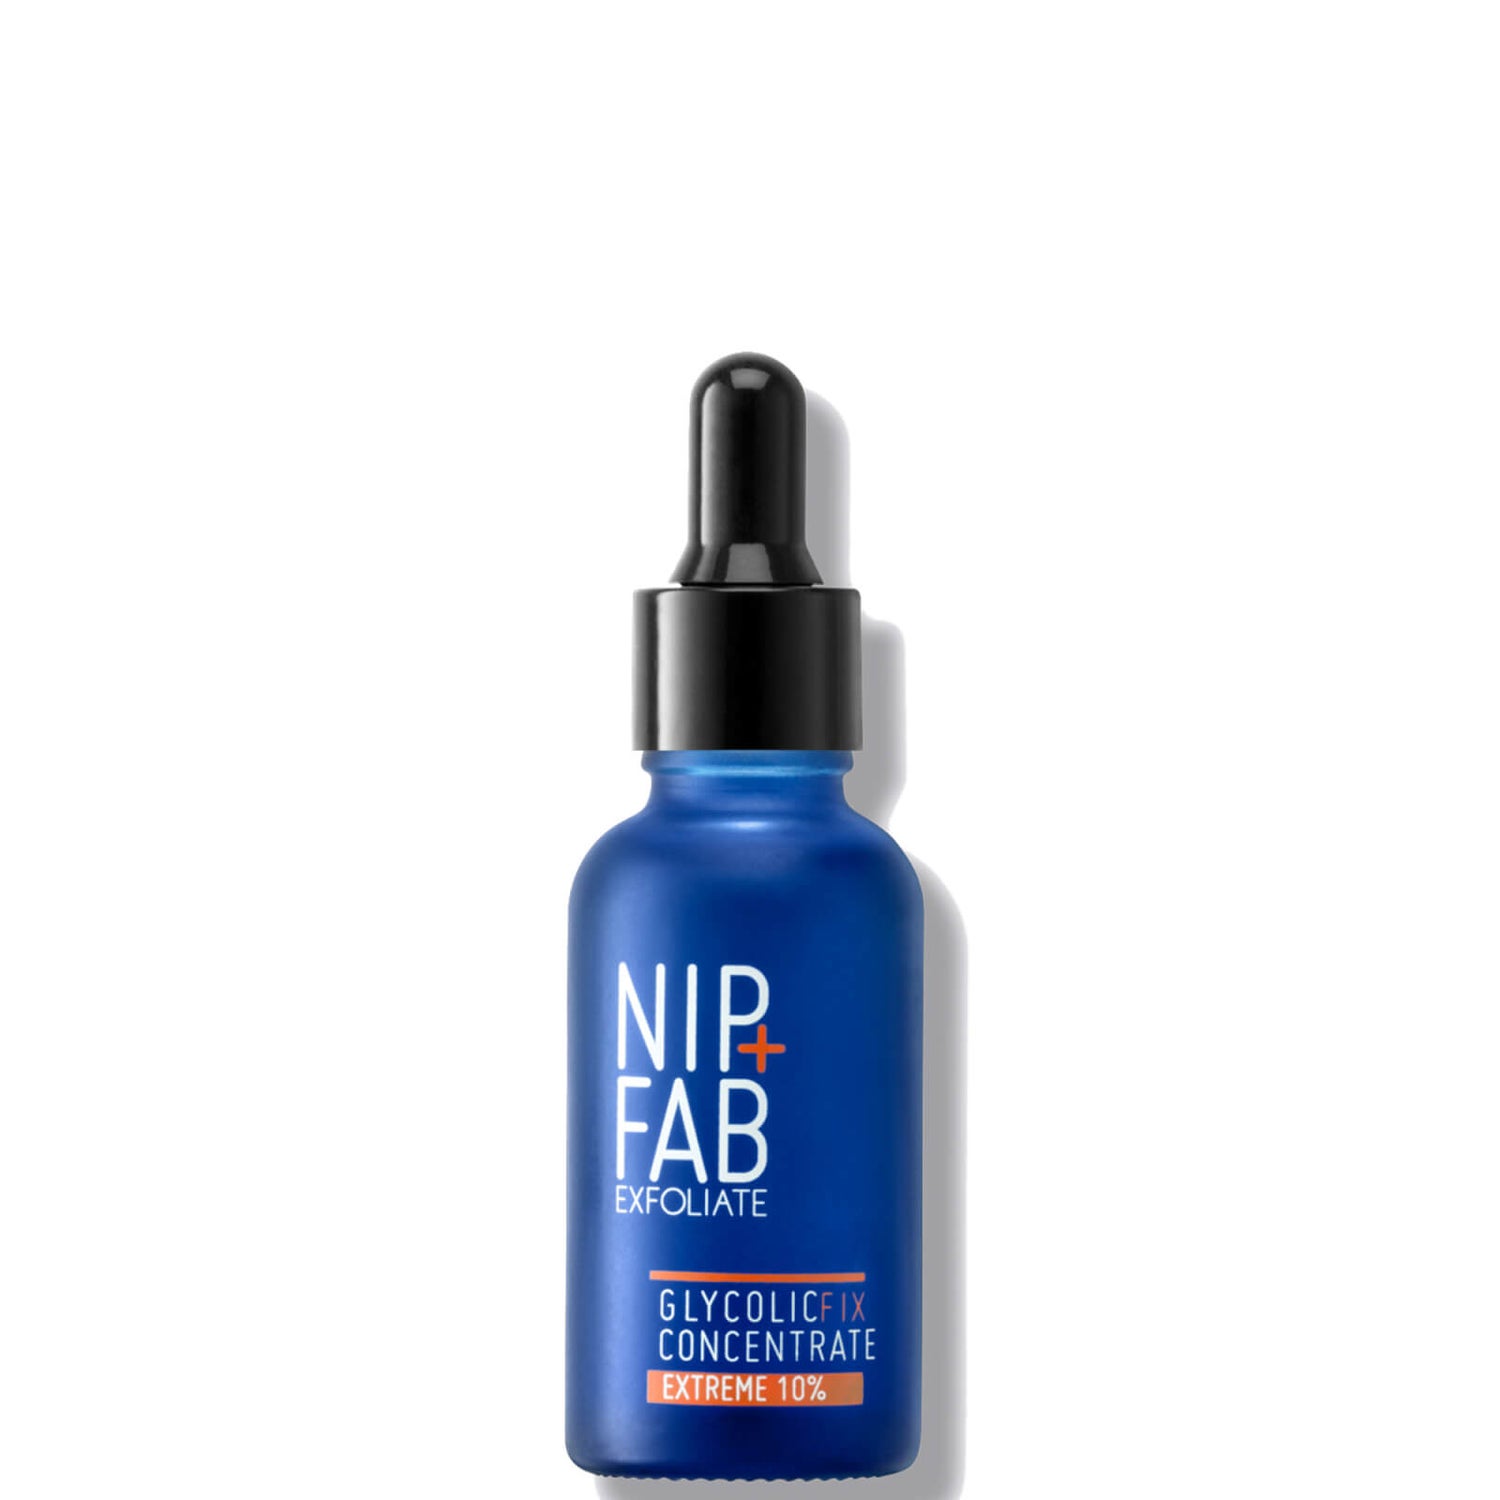 NIP+FAB 果酸温和去角质液 10% 30ml